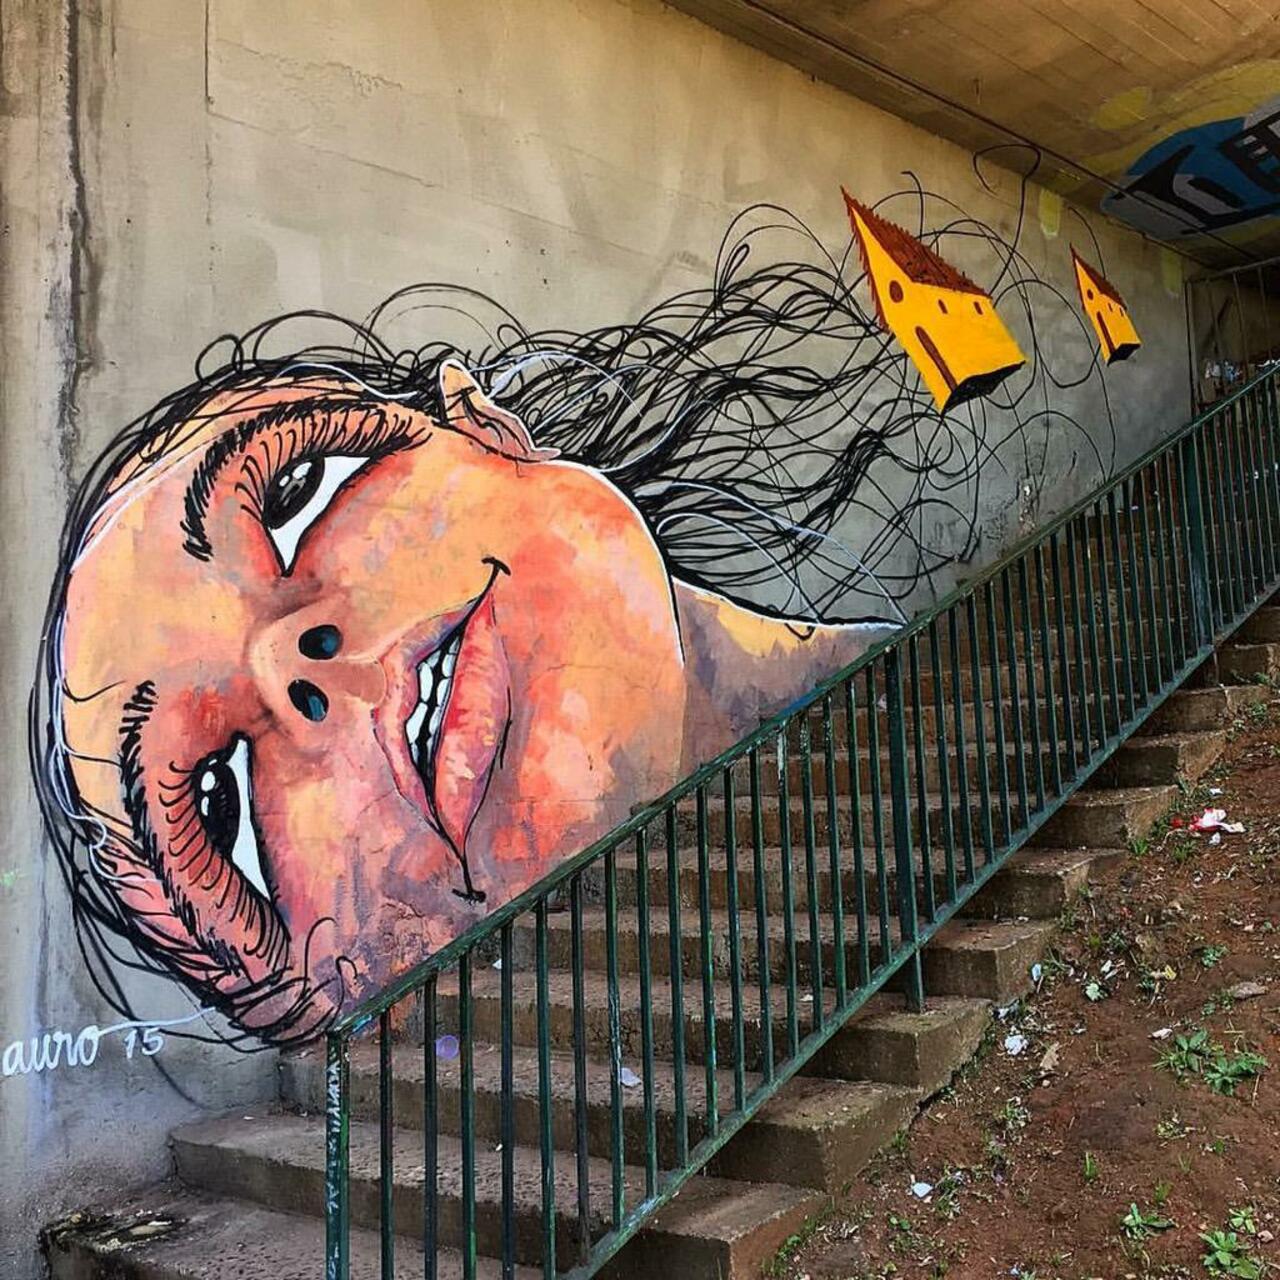 Street Art by Reveracidade in São Paulo 

#art #graffiti #mural #streetart http://t.co/SVp0jpo8jE